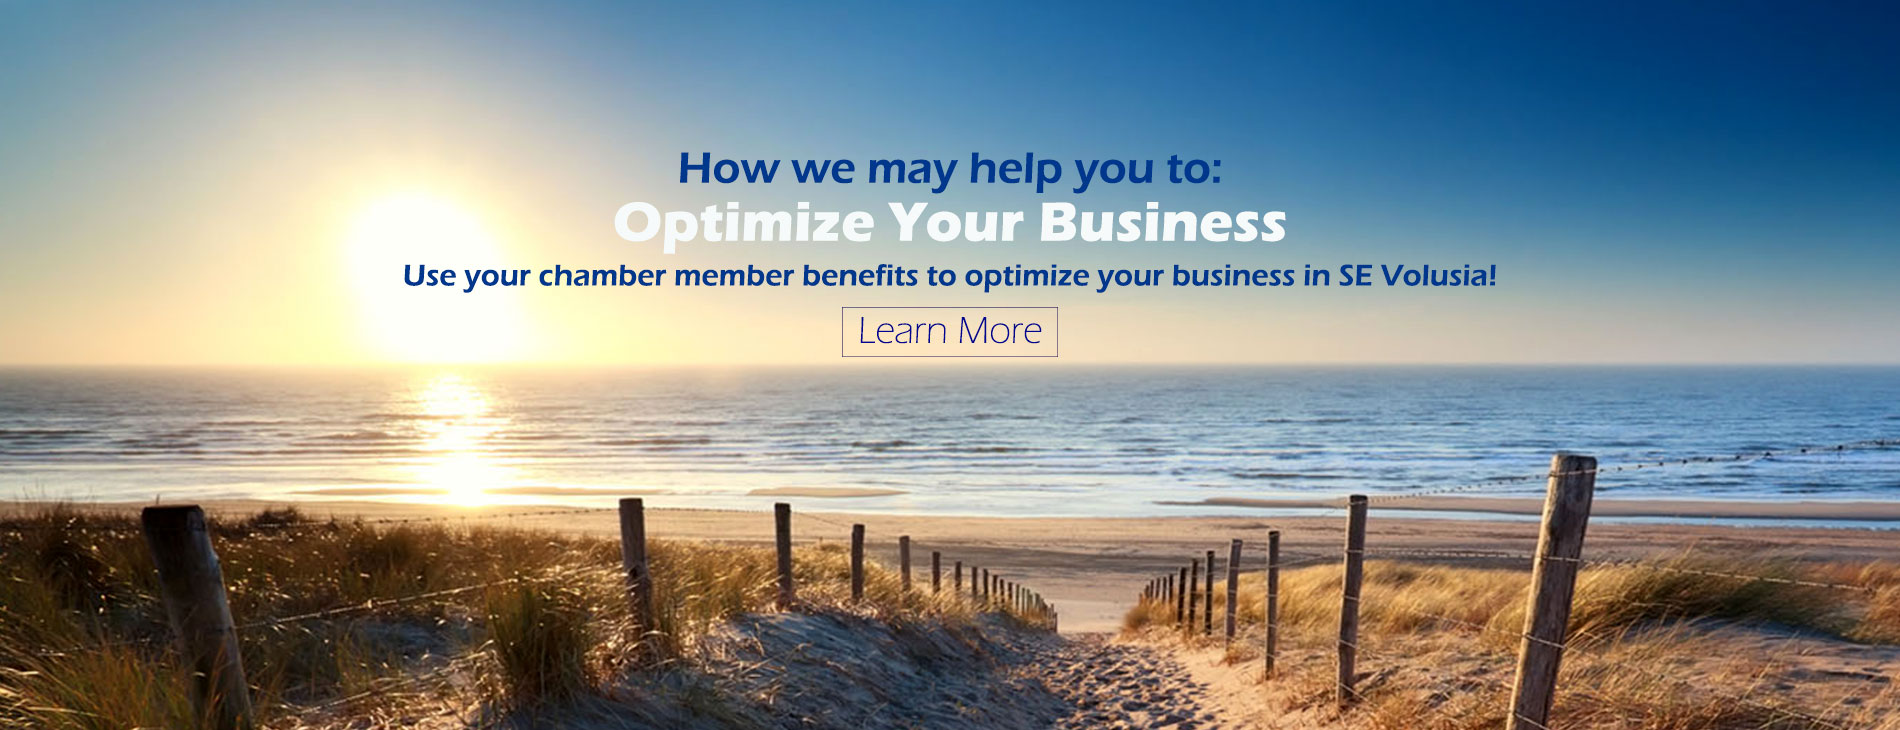 Optimize Your Business Slide